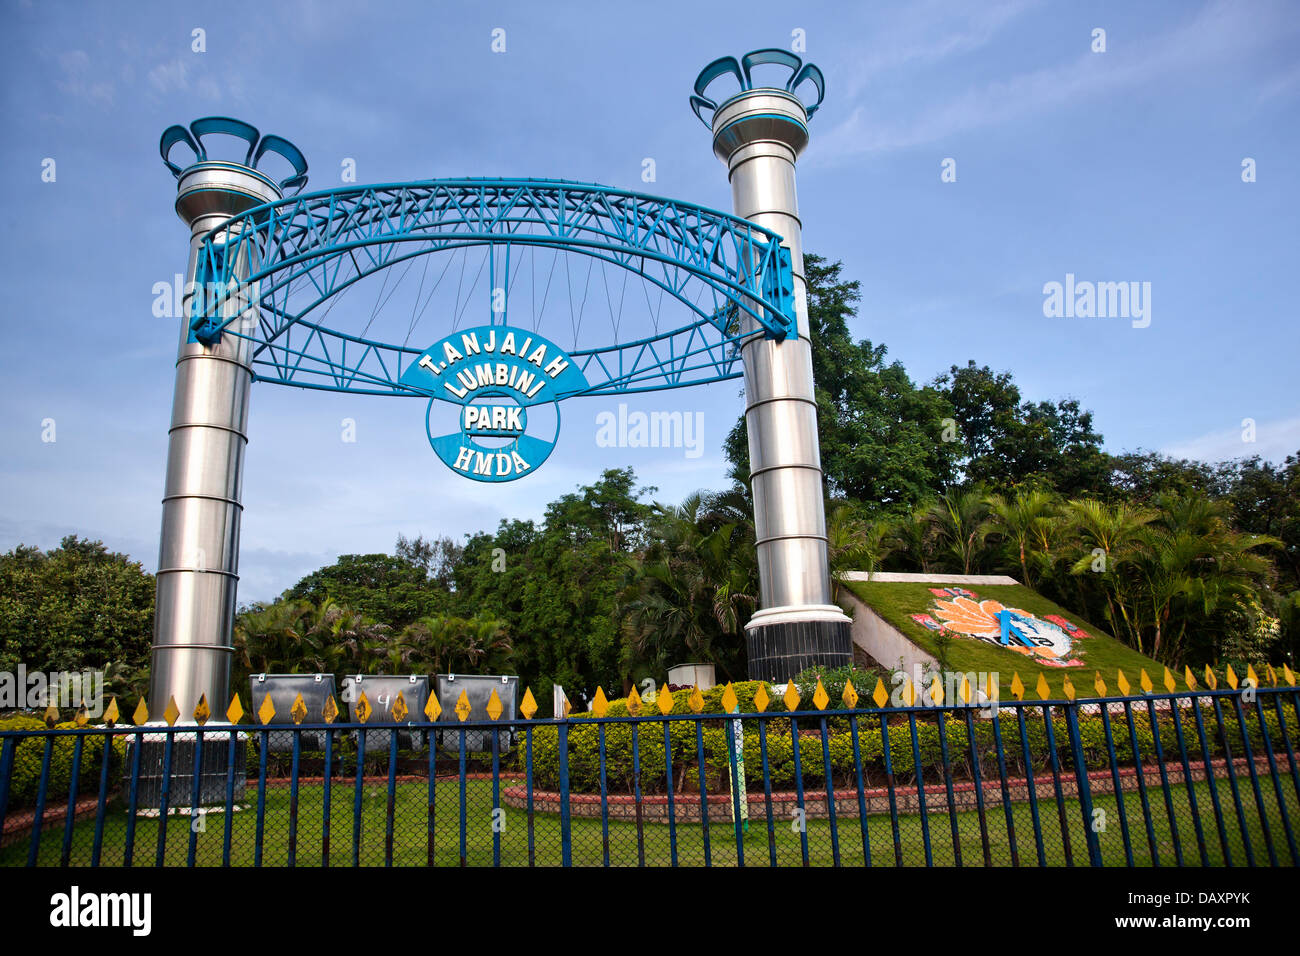 Parc Lumbini, Hyderabad, Andhra Pradesh, Inde Banque D'Images